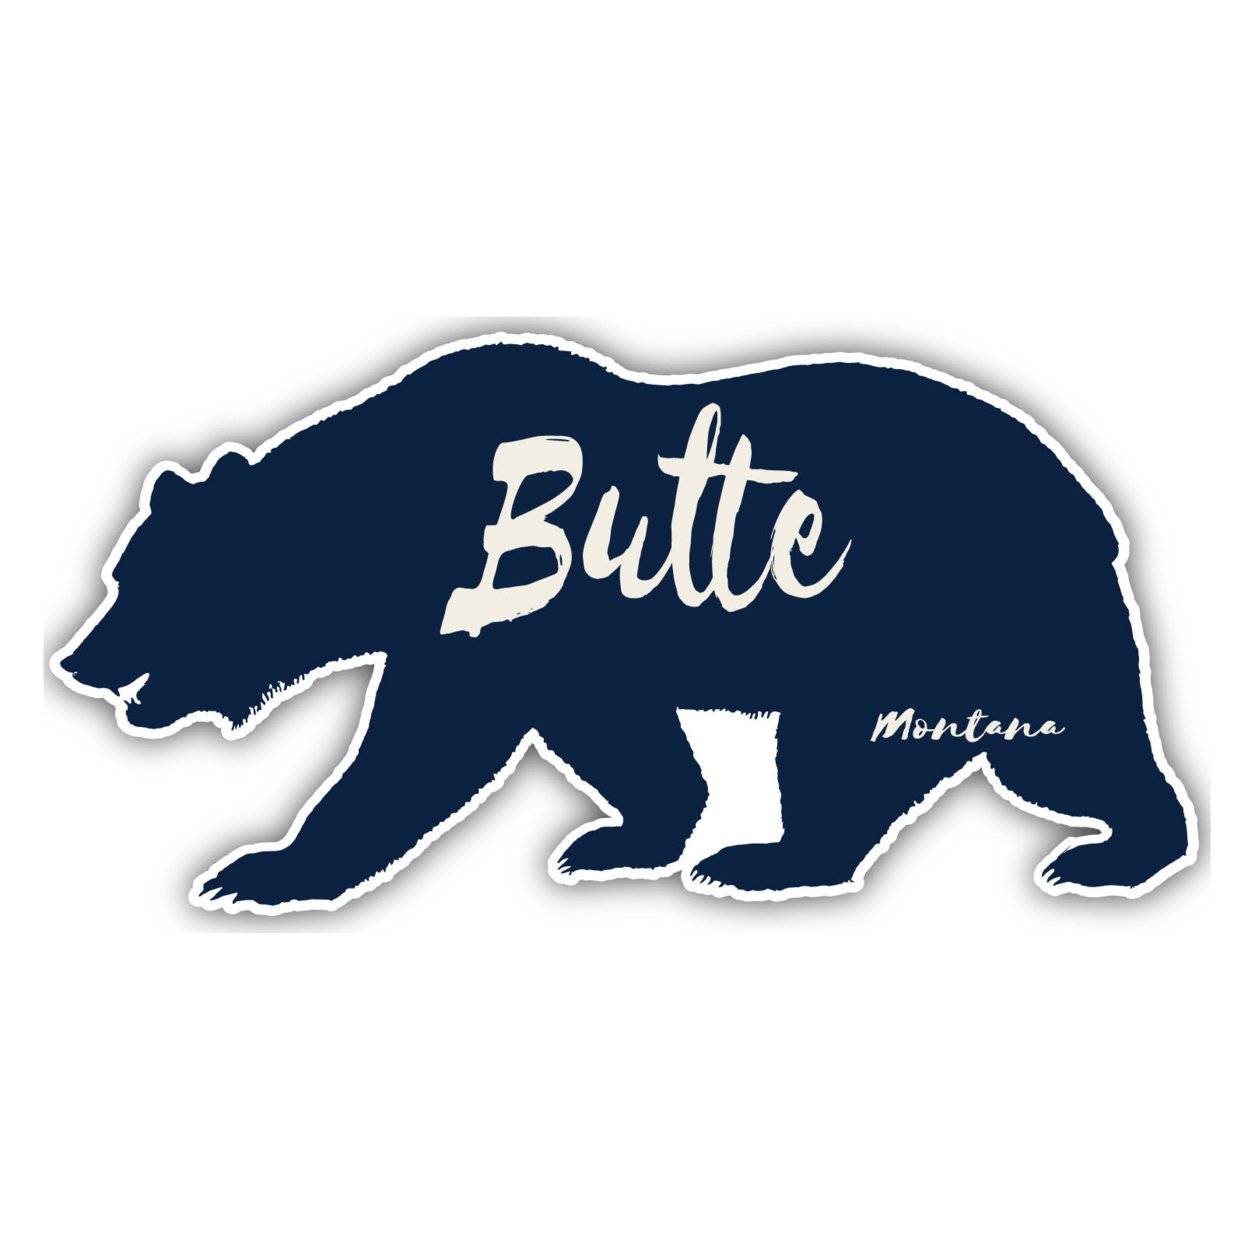 Butte Montana Souvenir Decorative Stickers (Choose Theme And Size) - Single Unit, 6-Inch, Bear